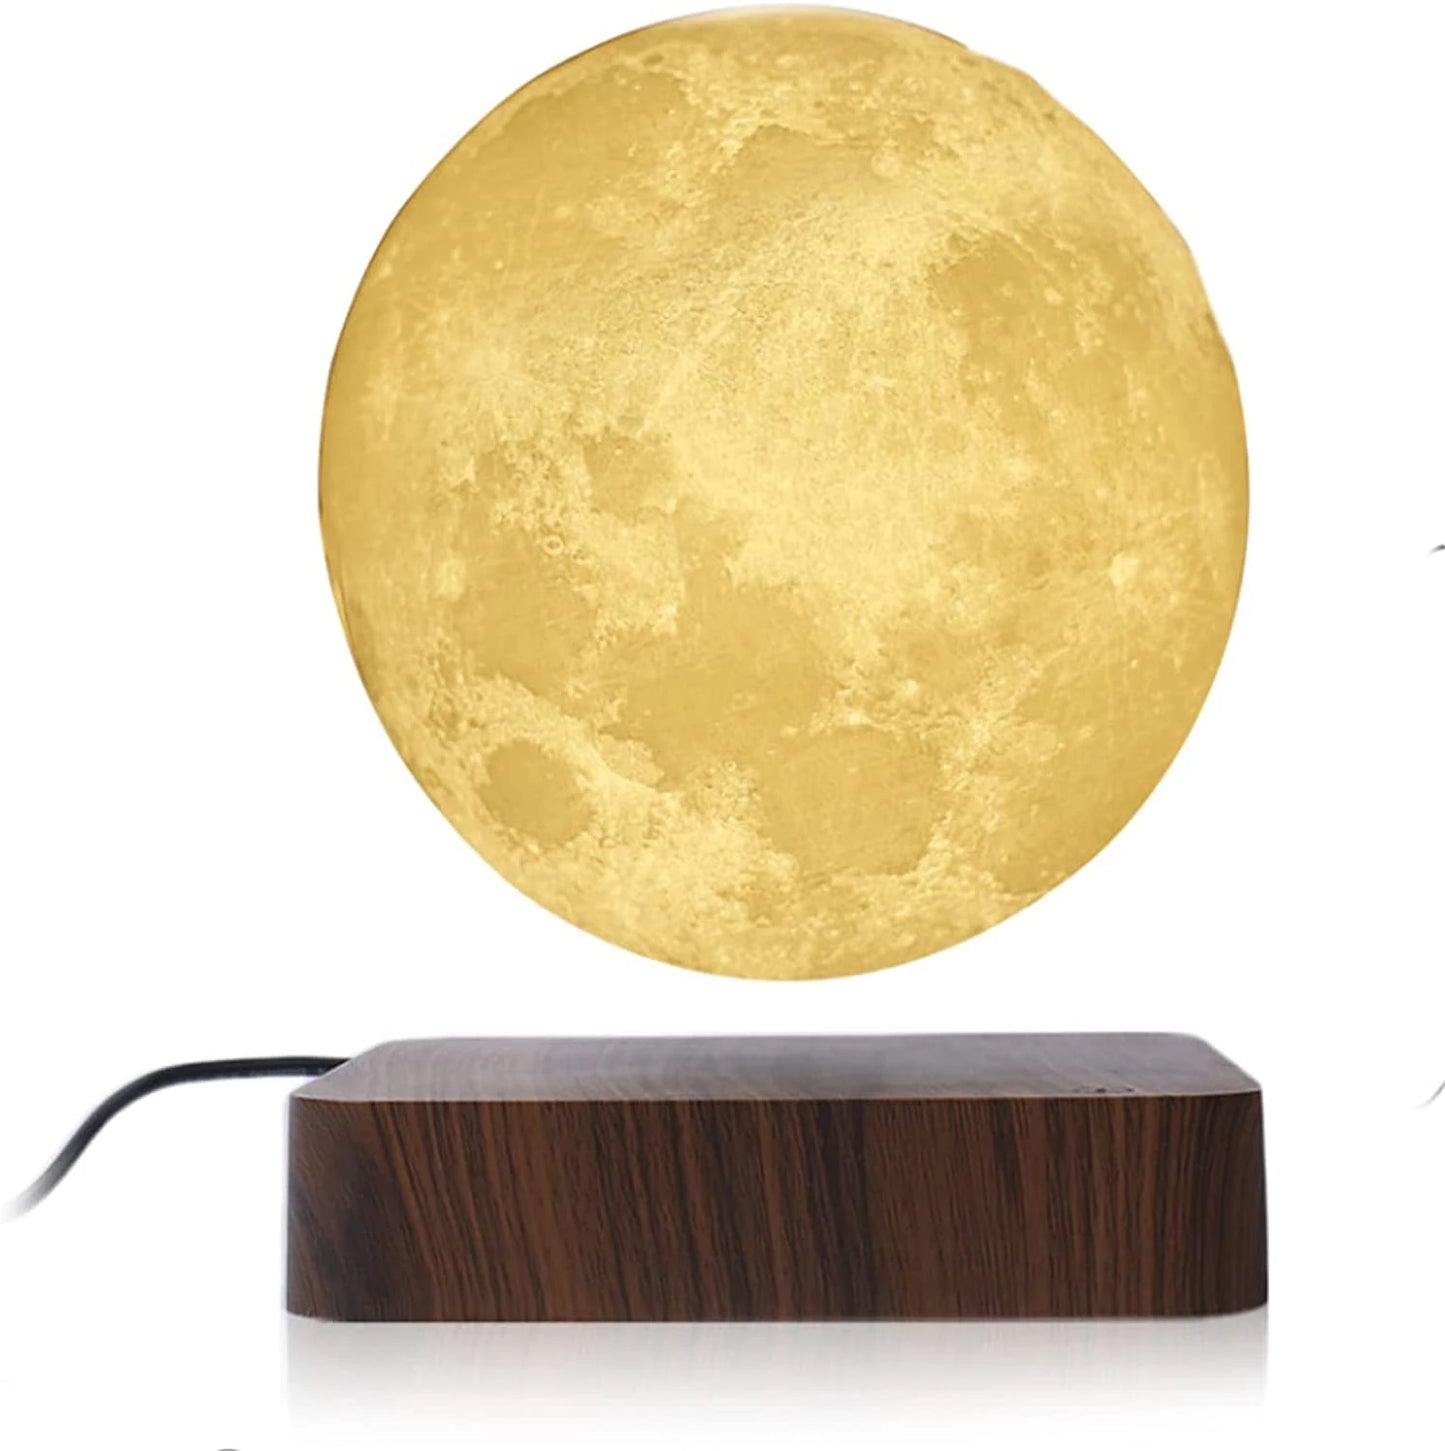 BrightStarAngel™ Levitating Moon Lamp